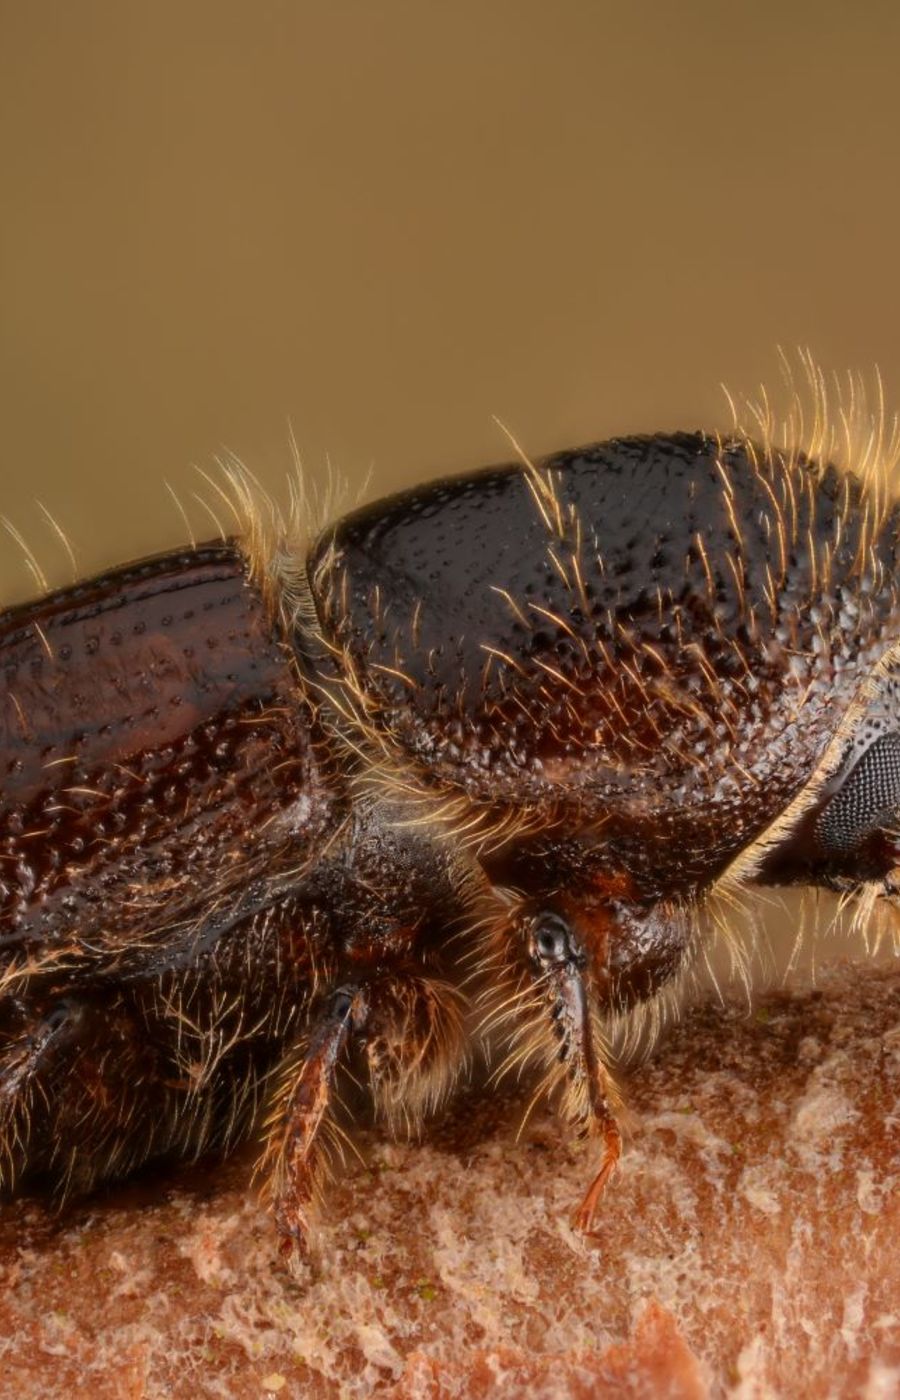 Female European spruce bark beetle